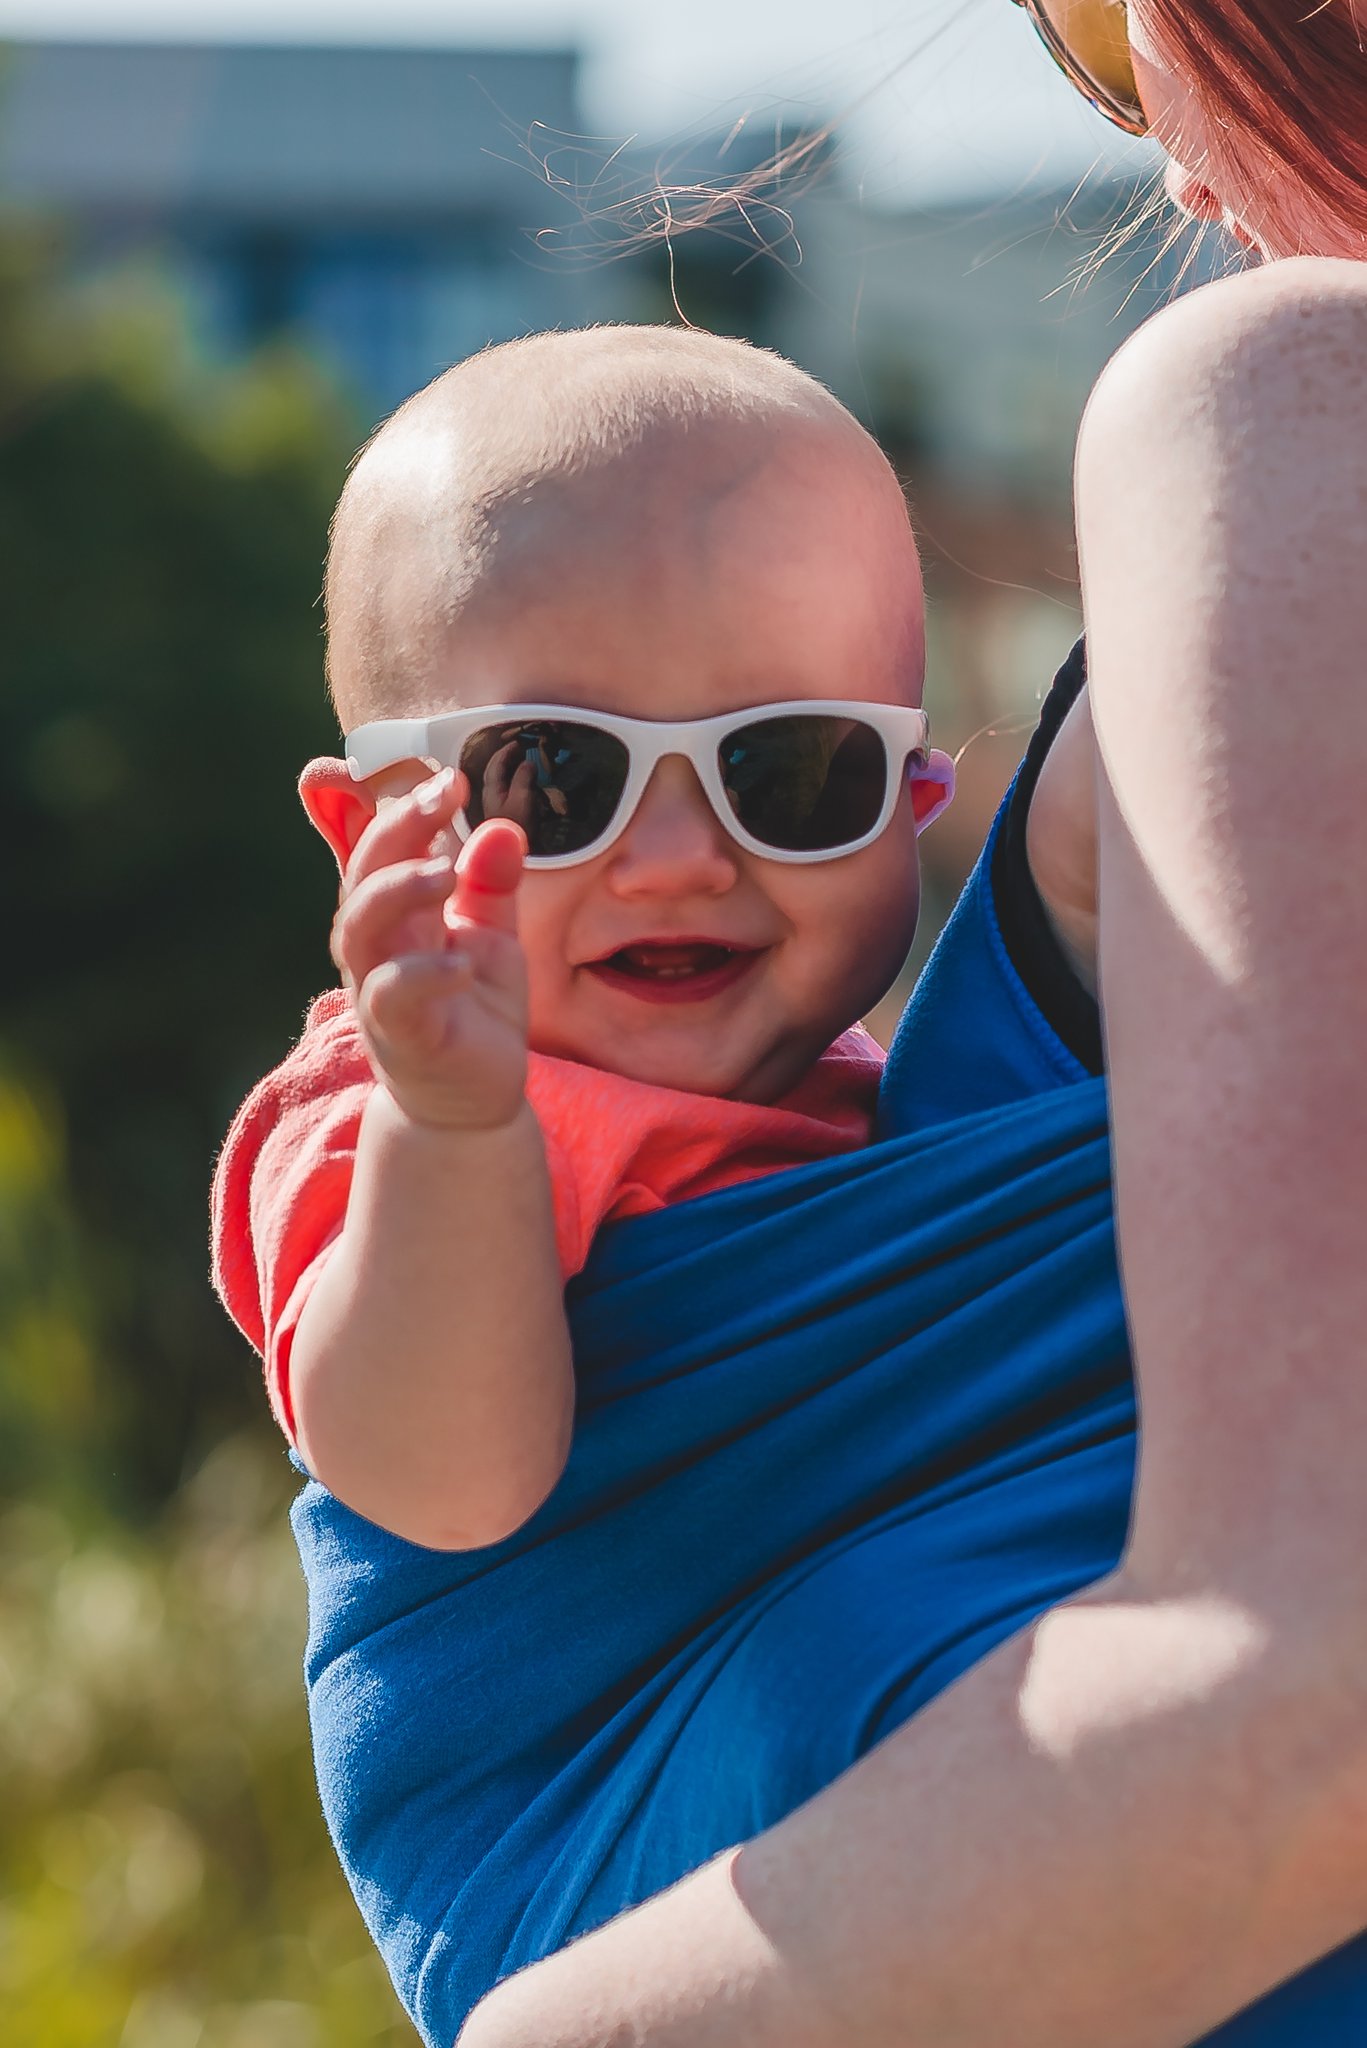 Baby Wearing Real Shades Surf Sunglasses